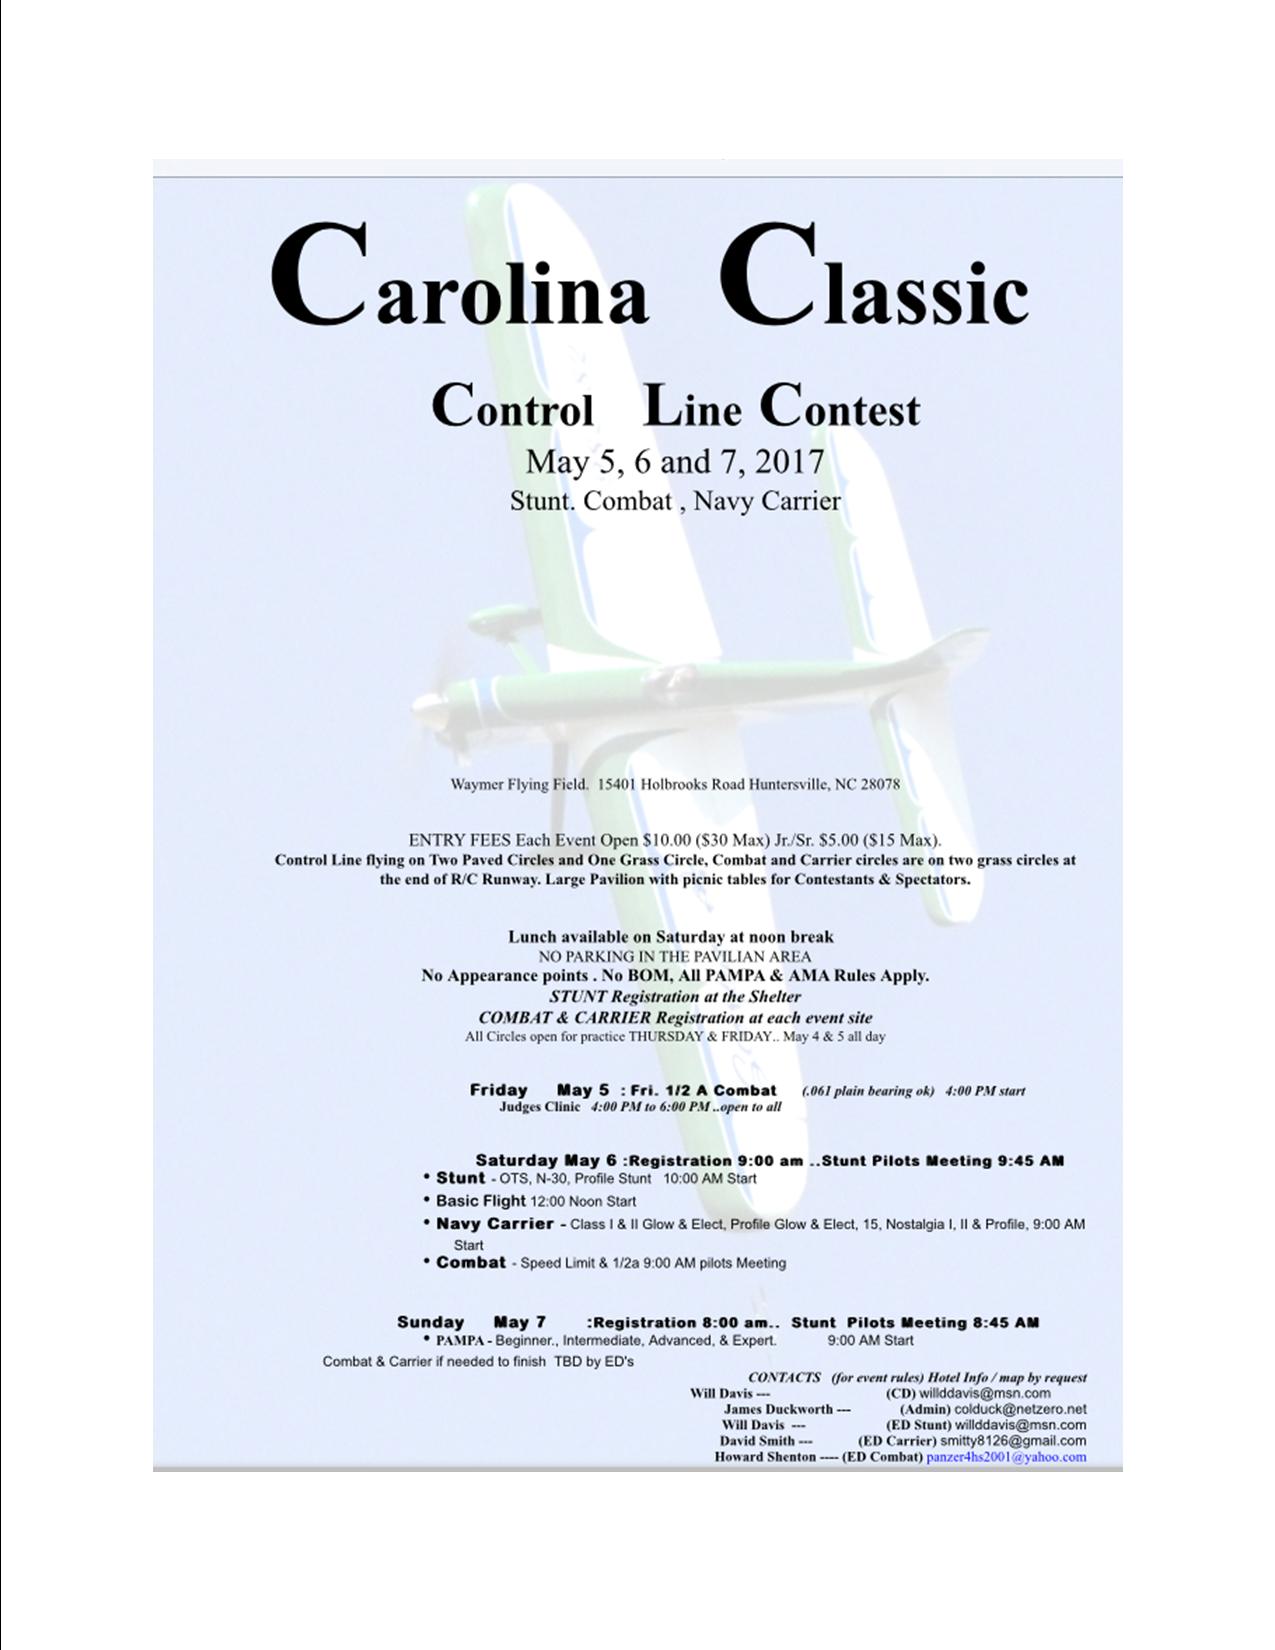 Come one, come all! The Carolina Classic - You won't regret it! Caroli11